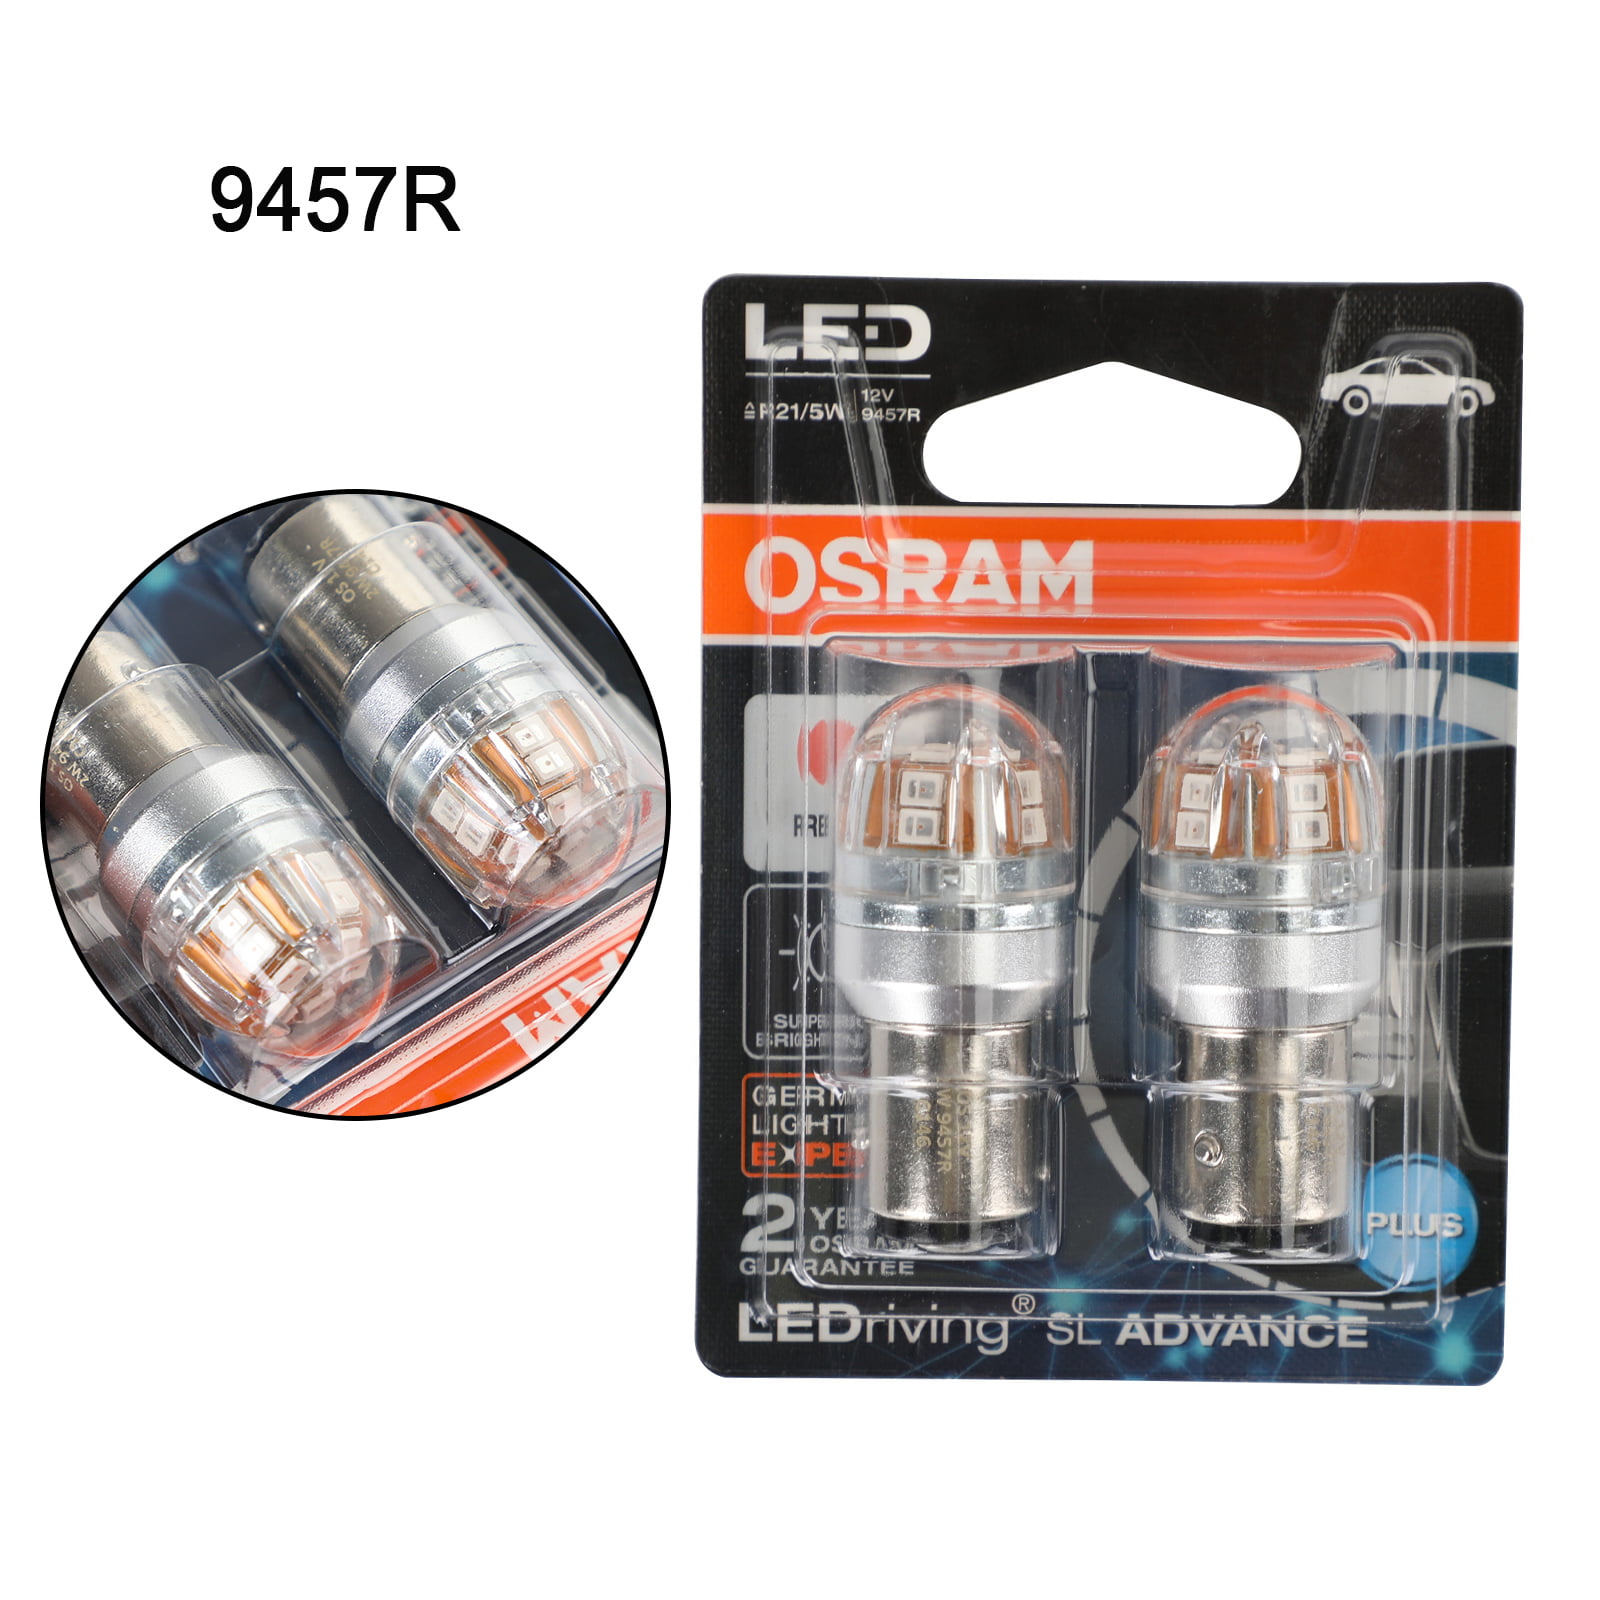 Interaction Stop buffet 2x For OSRAM 9457R Car Auxiliary Bulbs LED P21/5W 12V 2/0.2W BAY15d -  Walmart.com